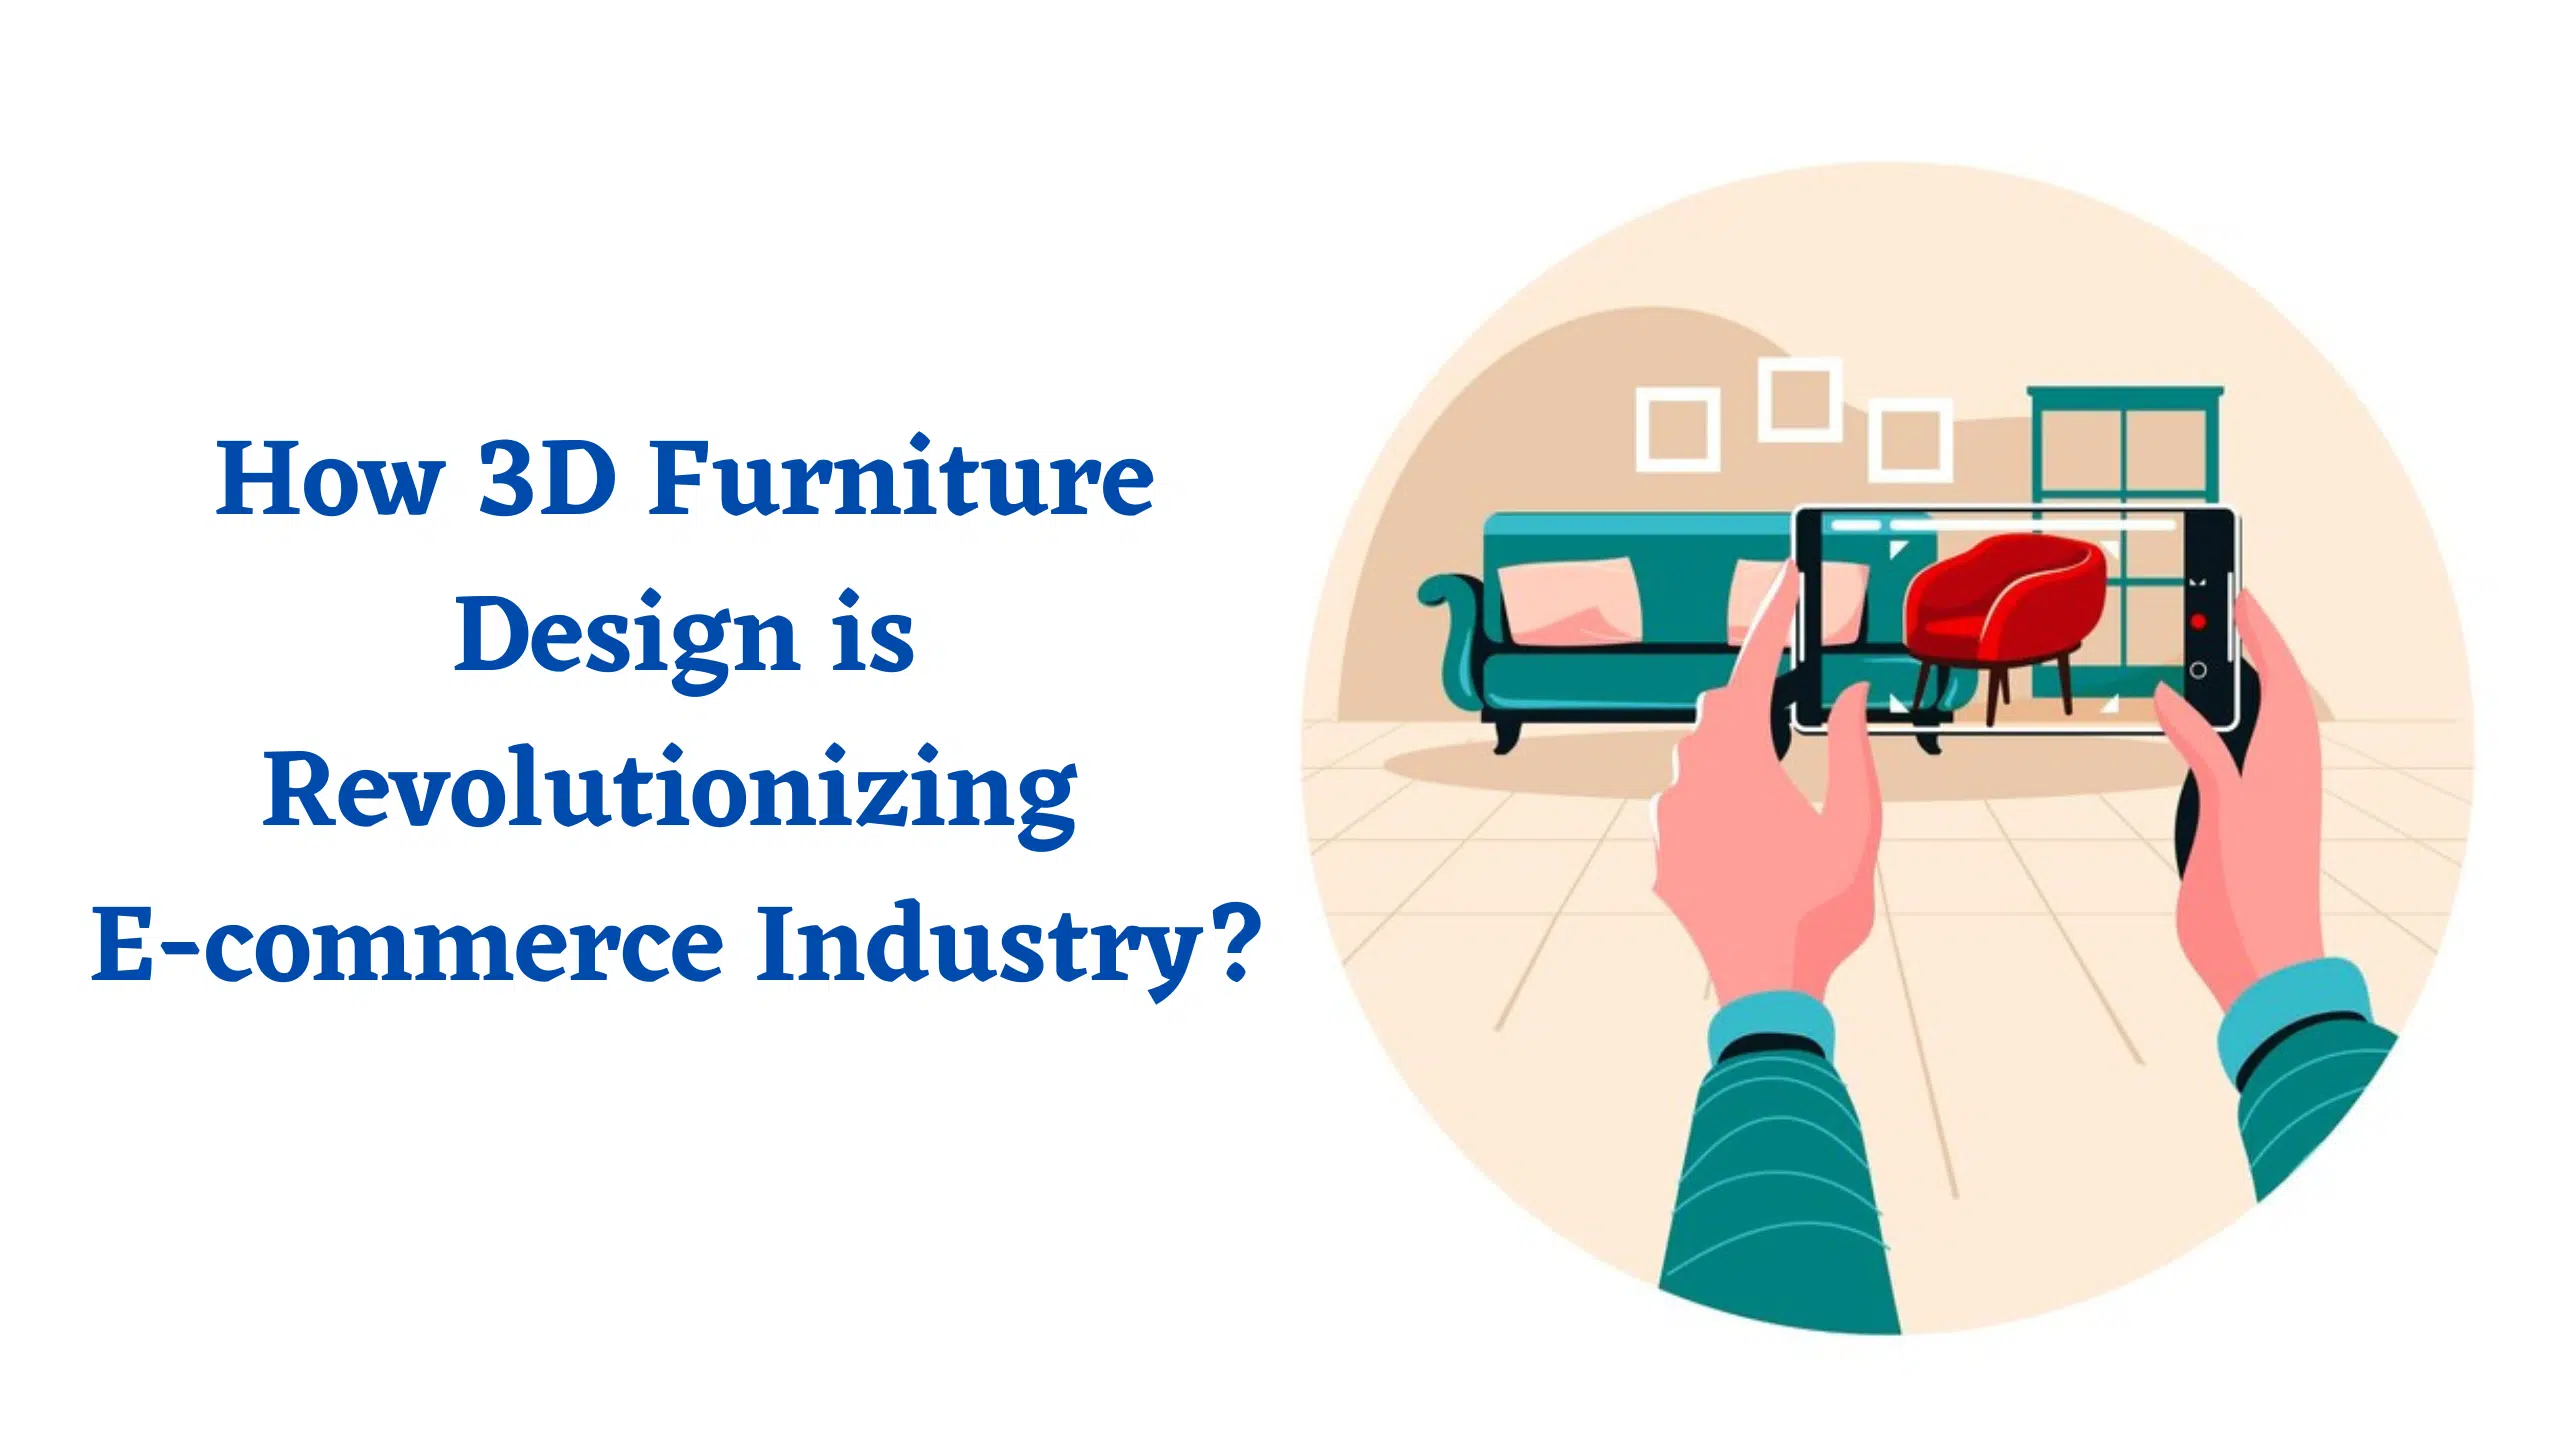 How 3D Furniture Design is Revolutionizing E-commerce Industry